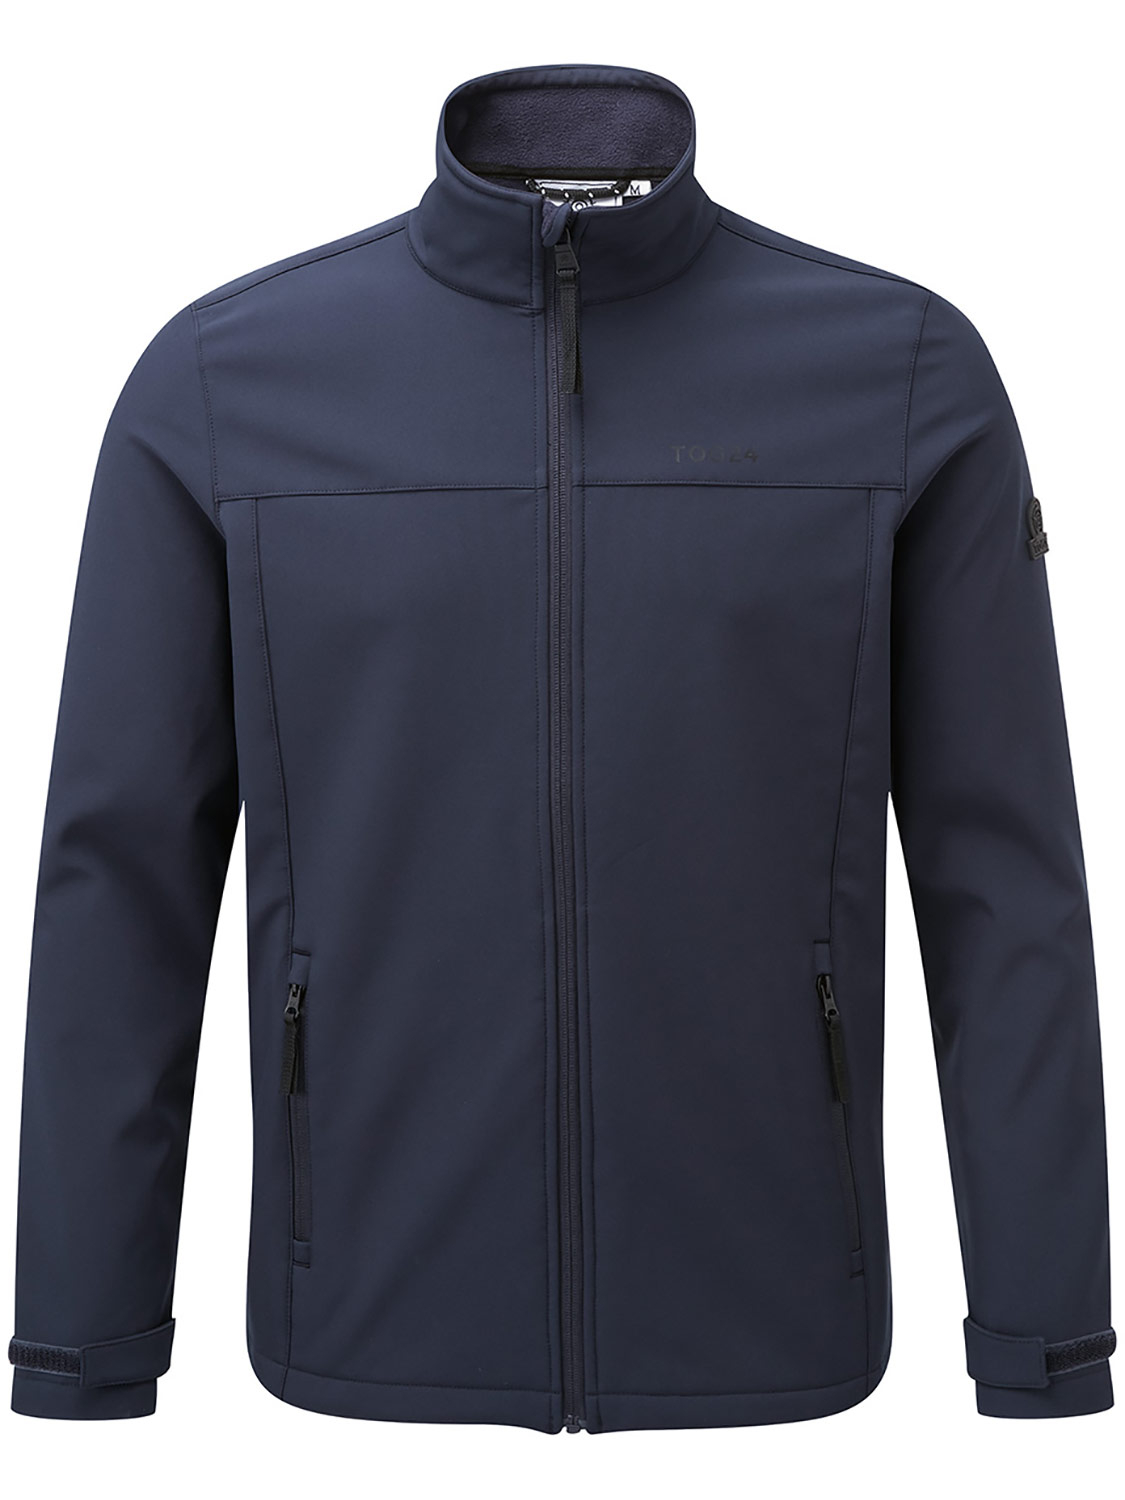 Feizor Softshell Jacket - Size: XL Men’s Blue Tog24